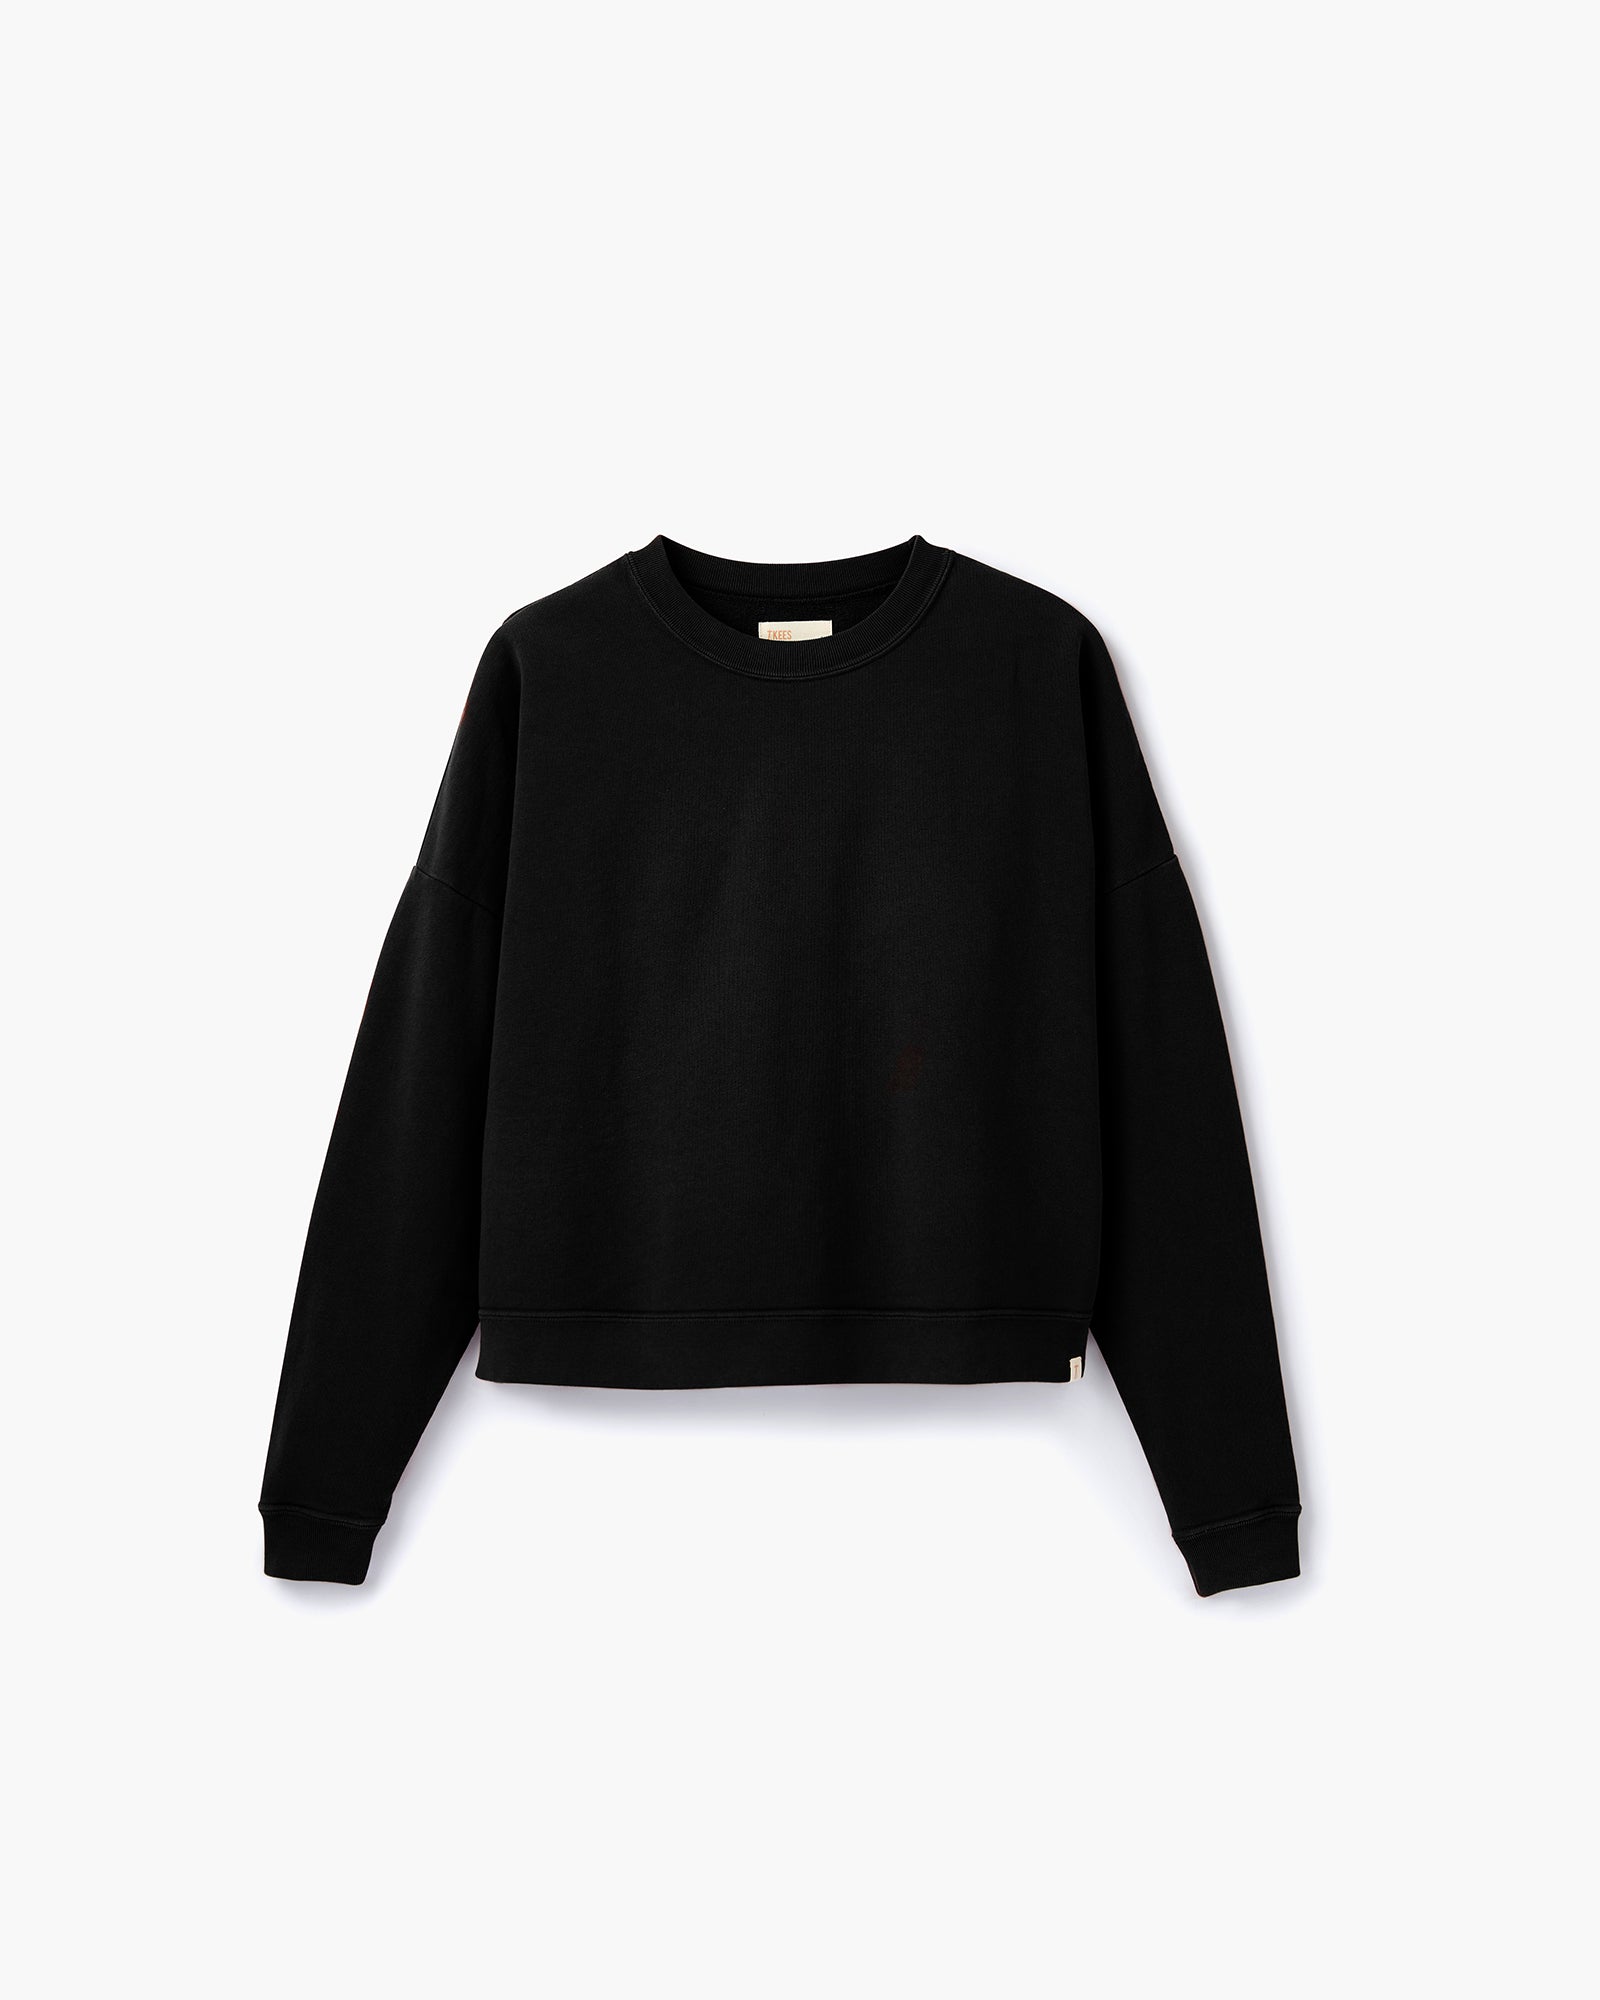 Core Boxy Crewneck in Black | Sweatshirts | Women's Clothing – TKEES